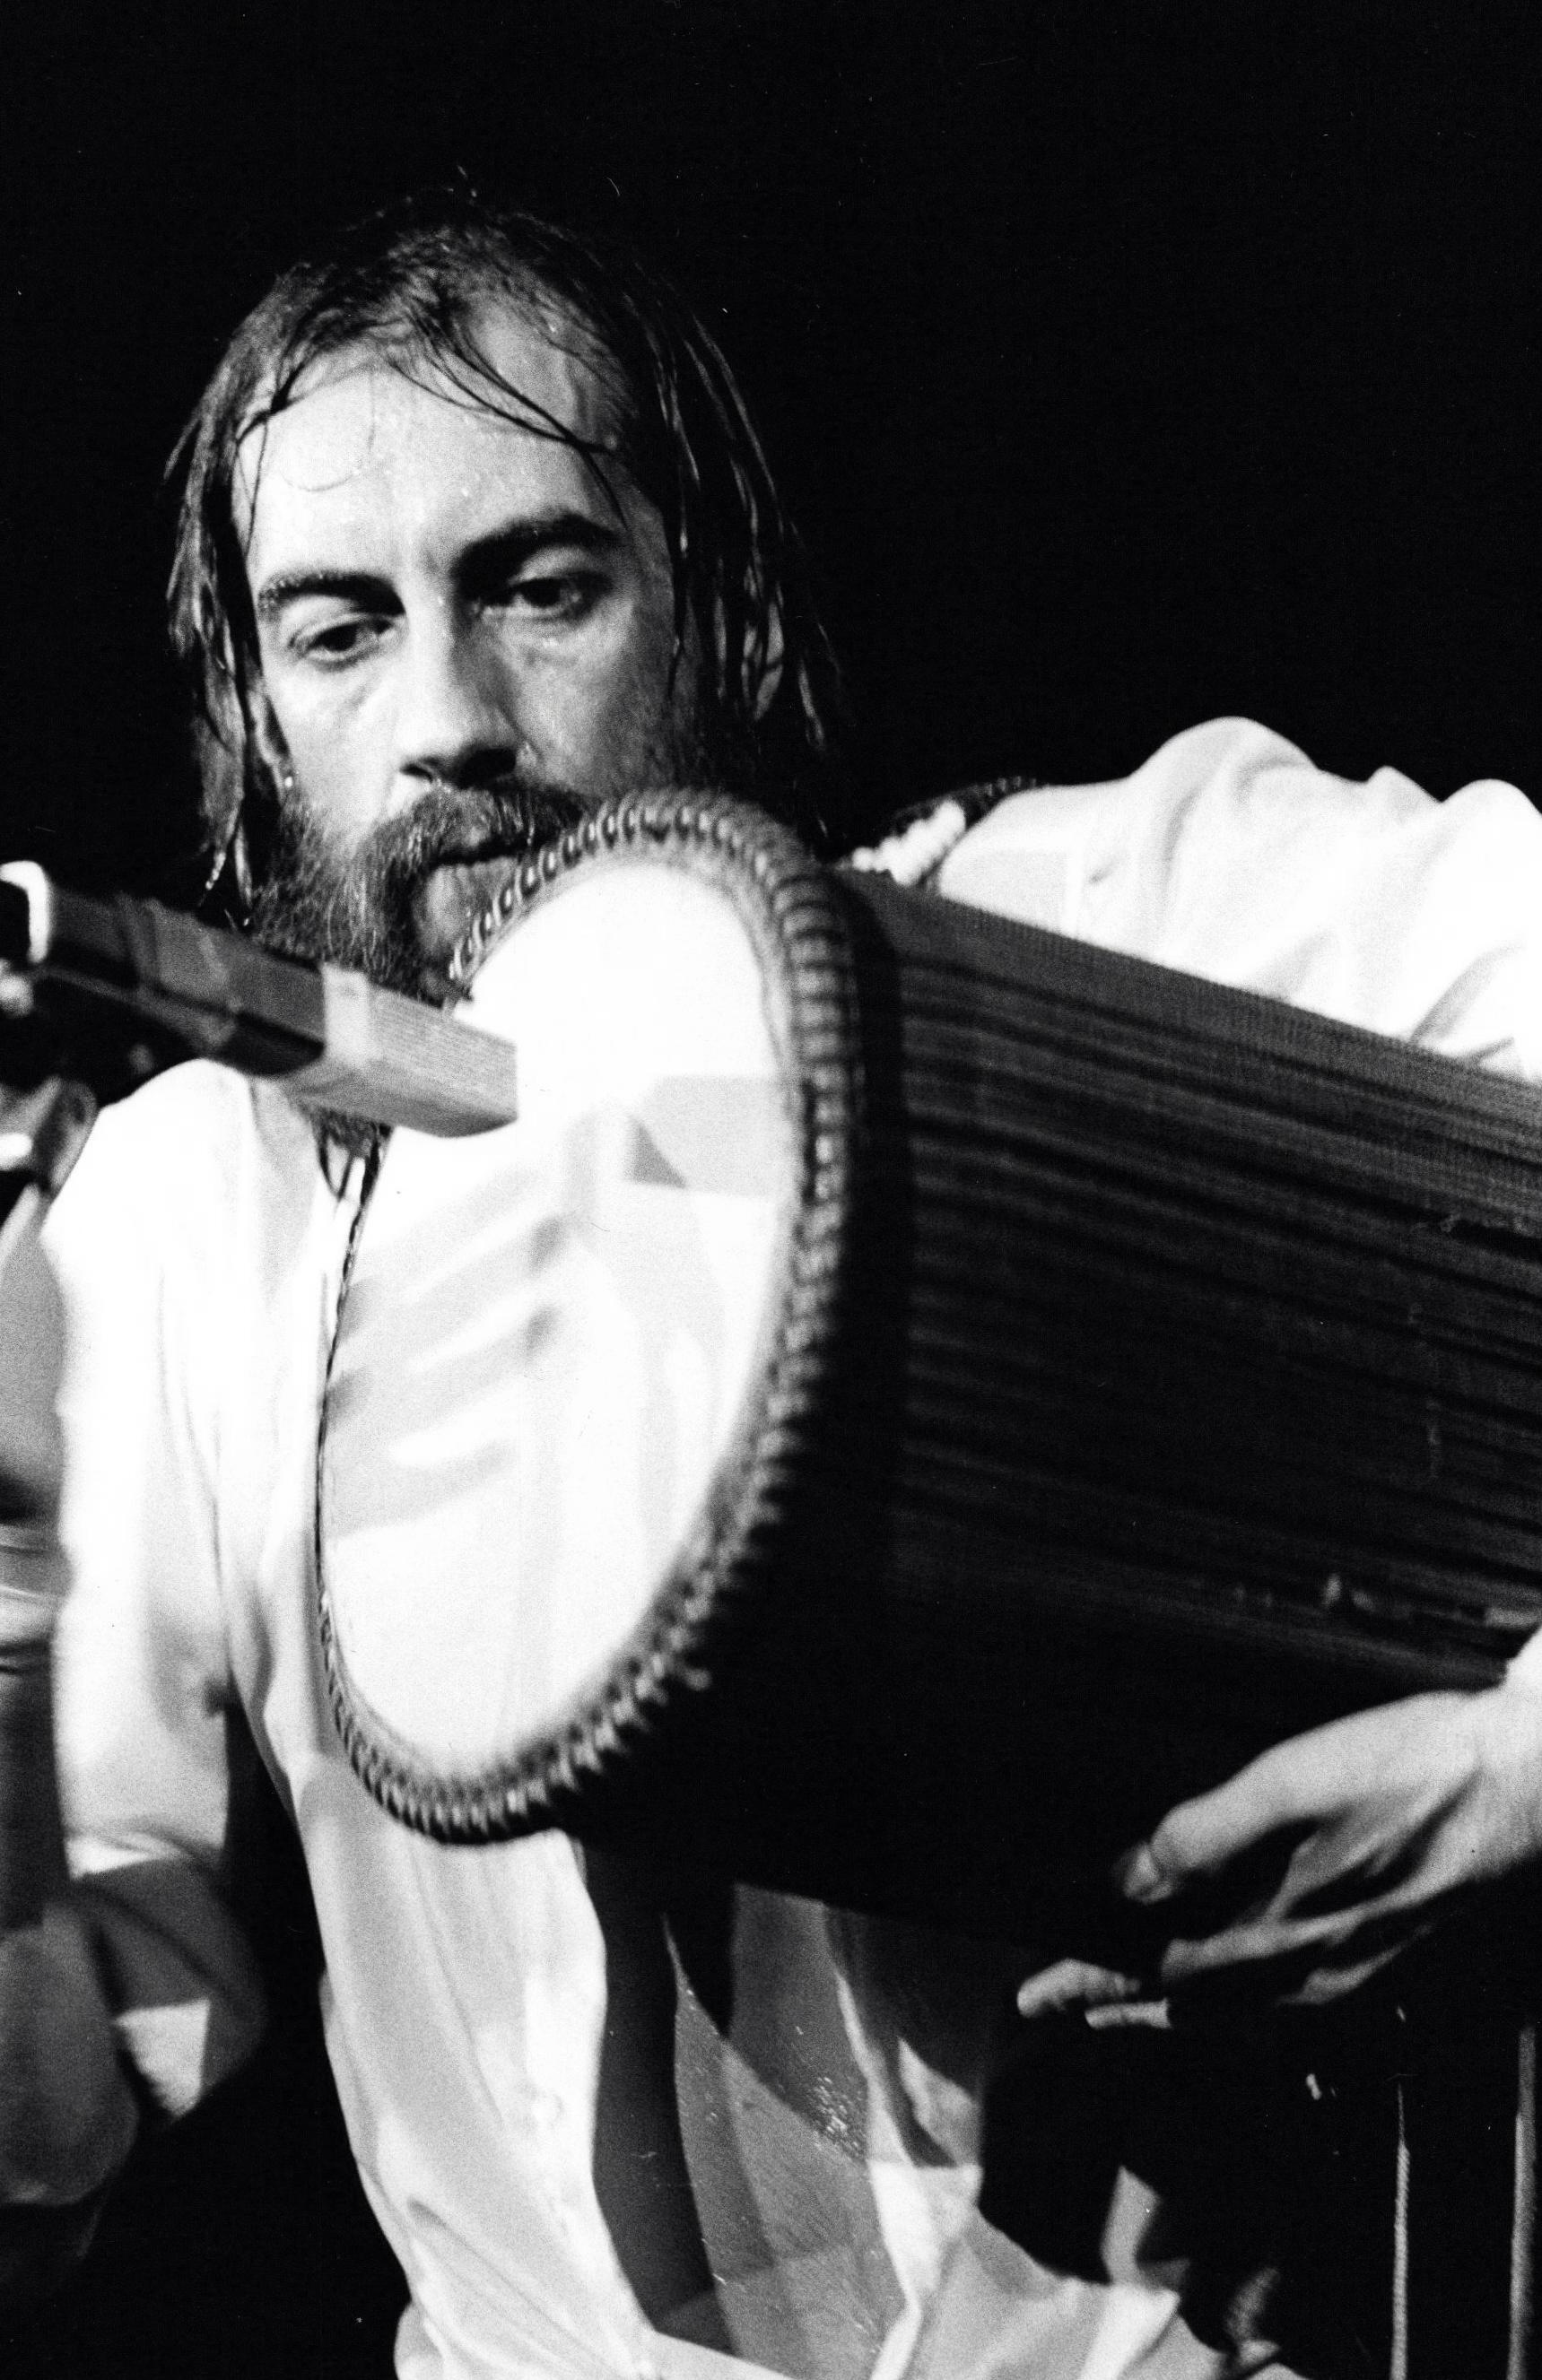 Neal Preston Black and White Photograph - Mick Fleetwood of Fleetwood Mac Playing Bongo Vintage Original Photograph